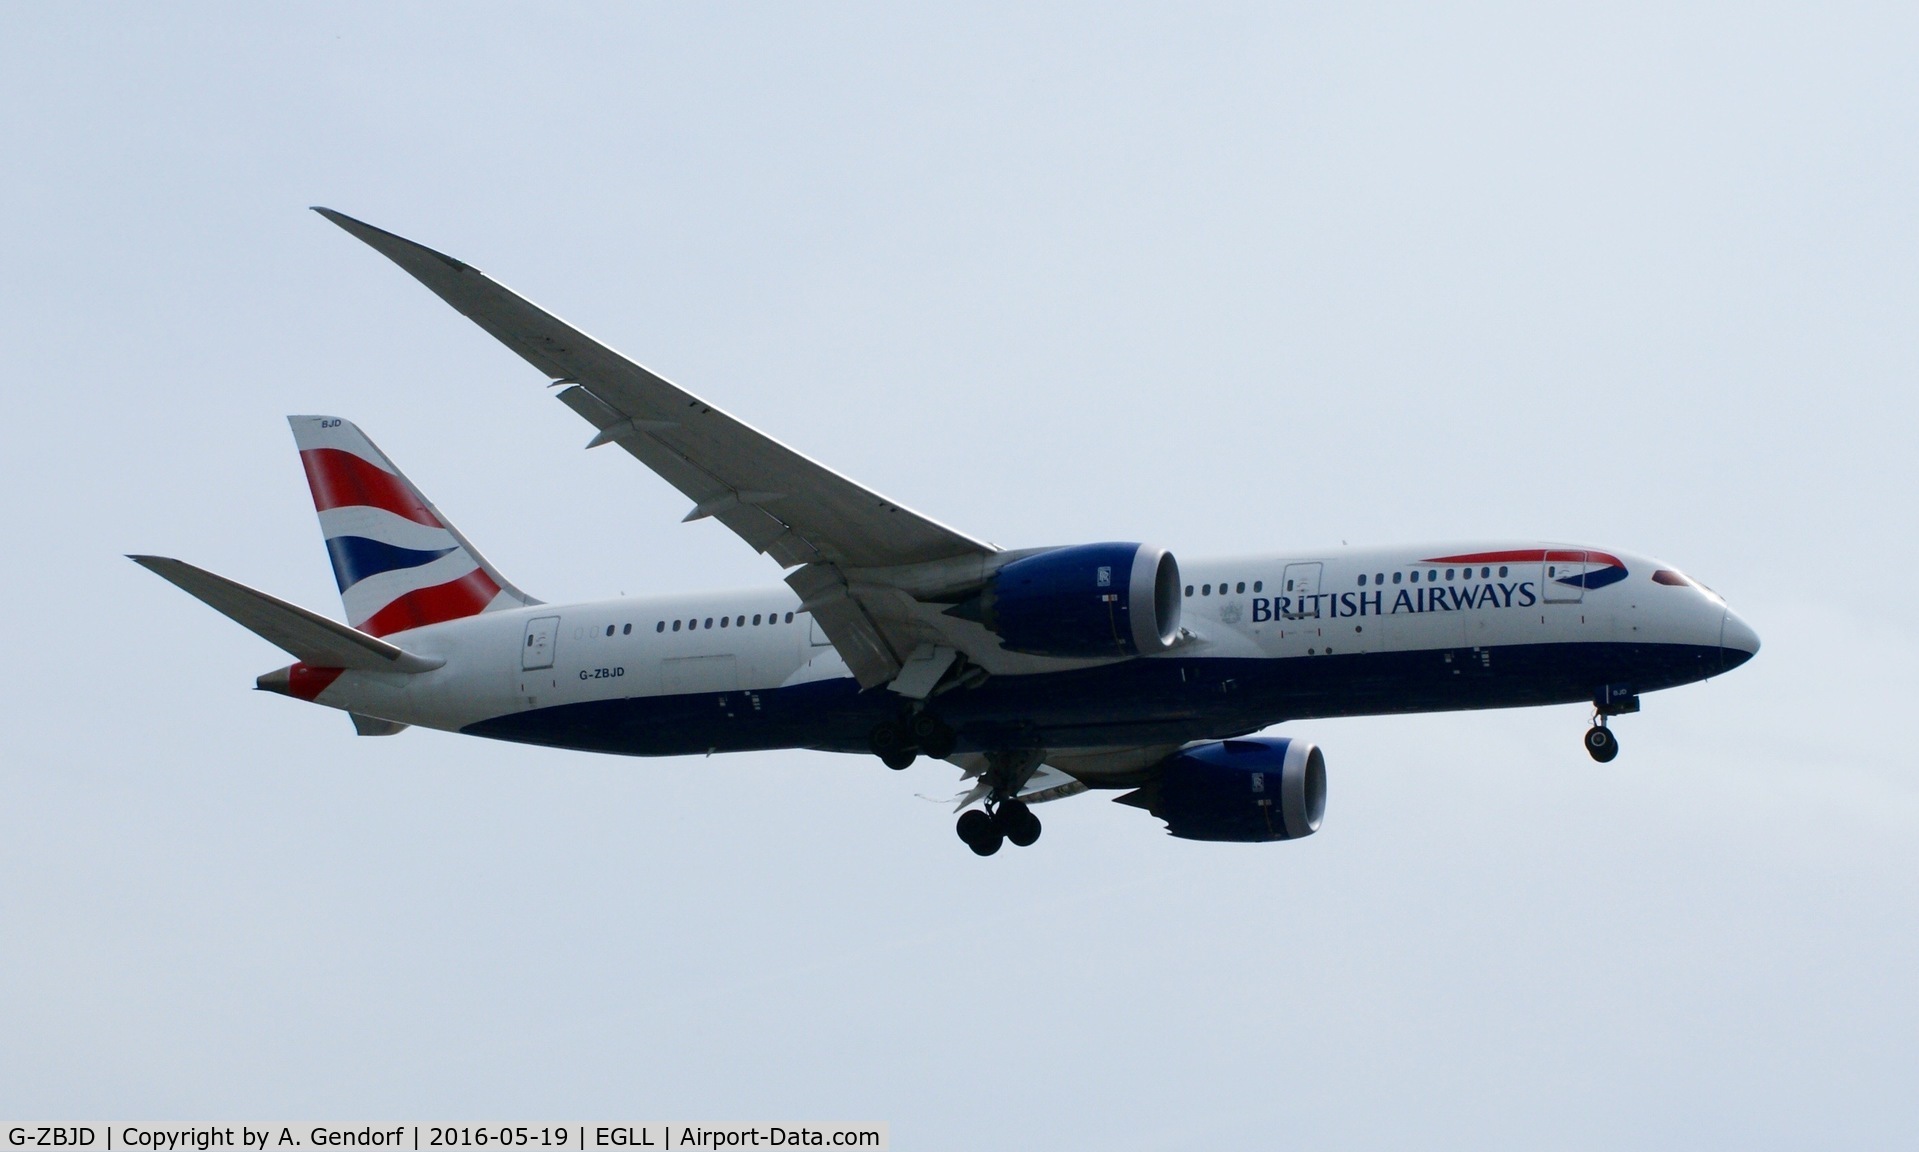 G-ZBJD, 2013 Boeing 787-8 Dreamliner C/N 38619, British Airways, is here returning to its homebase at London Heathrow(EGLL)